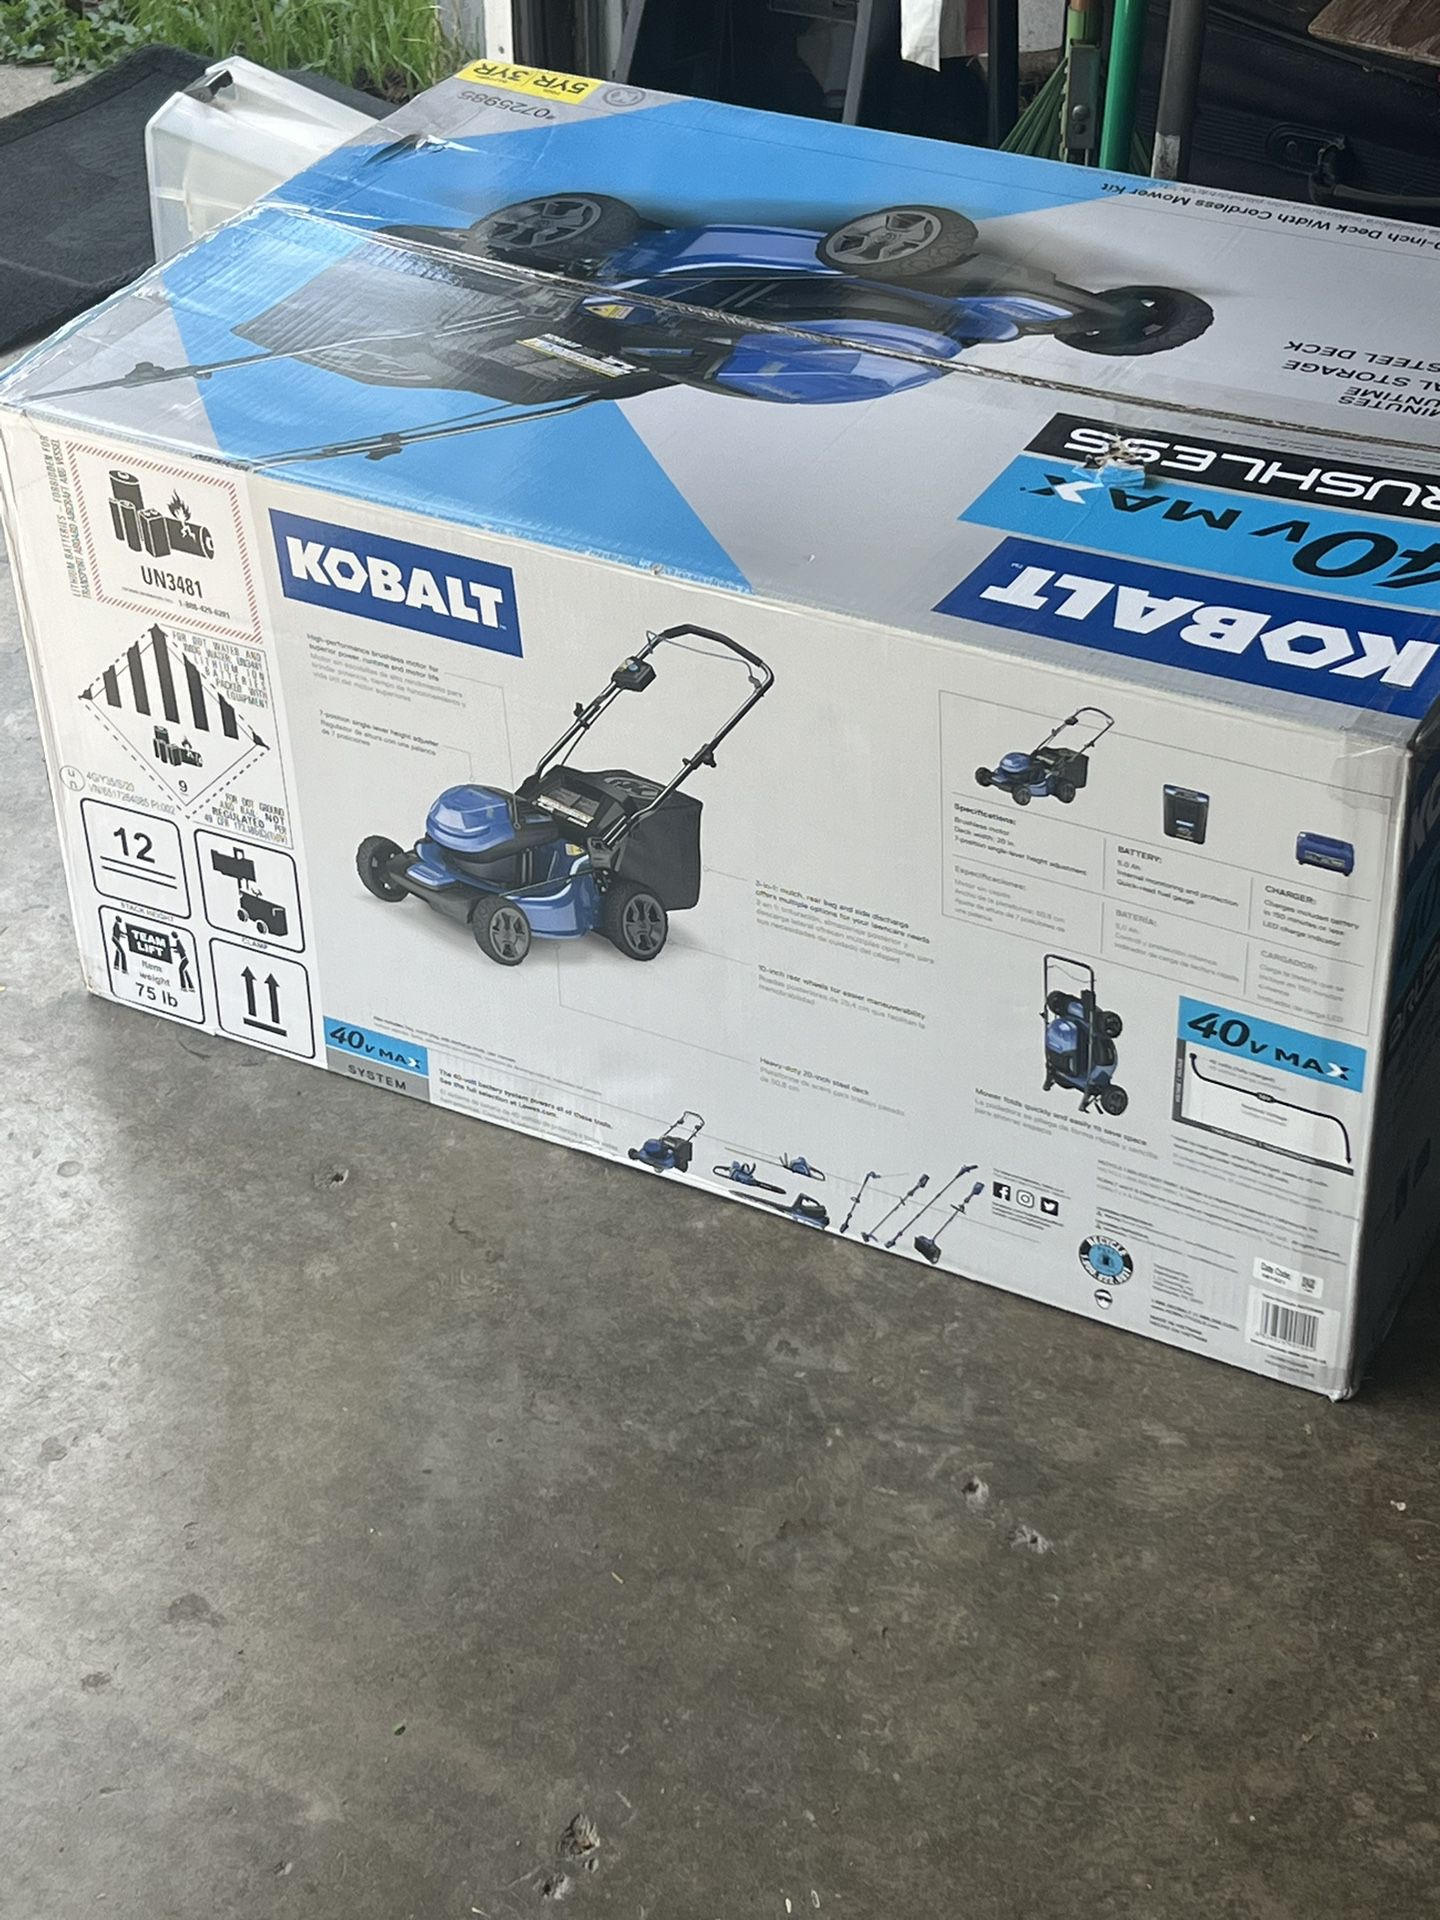 Kobalt Electric Lawn Mower 